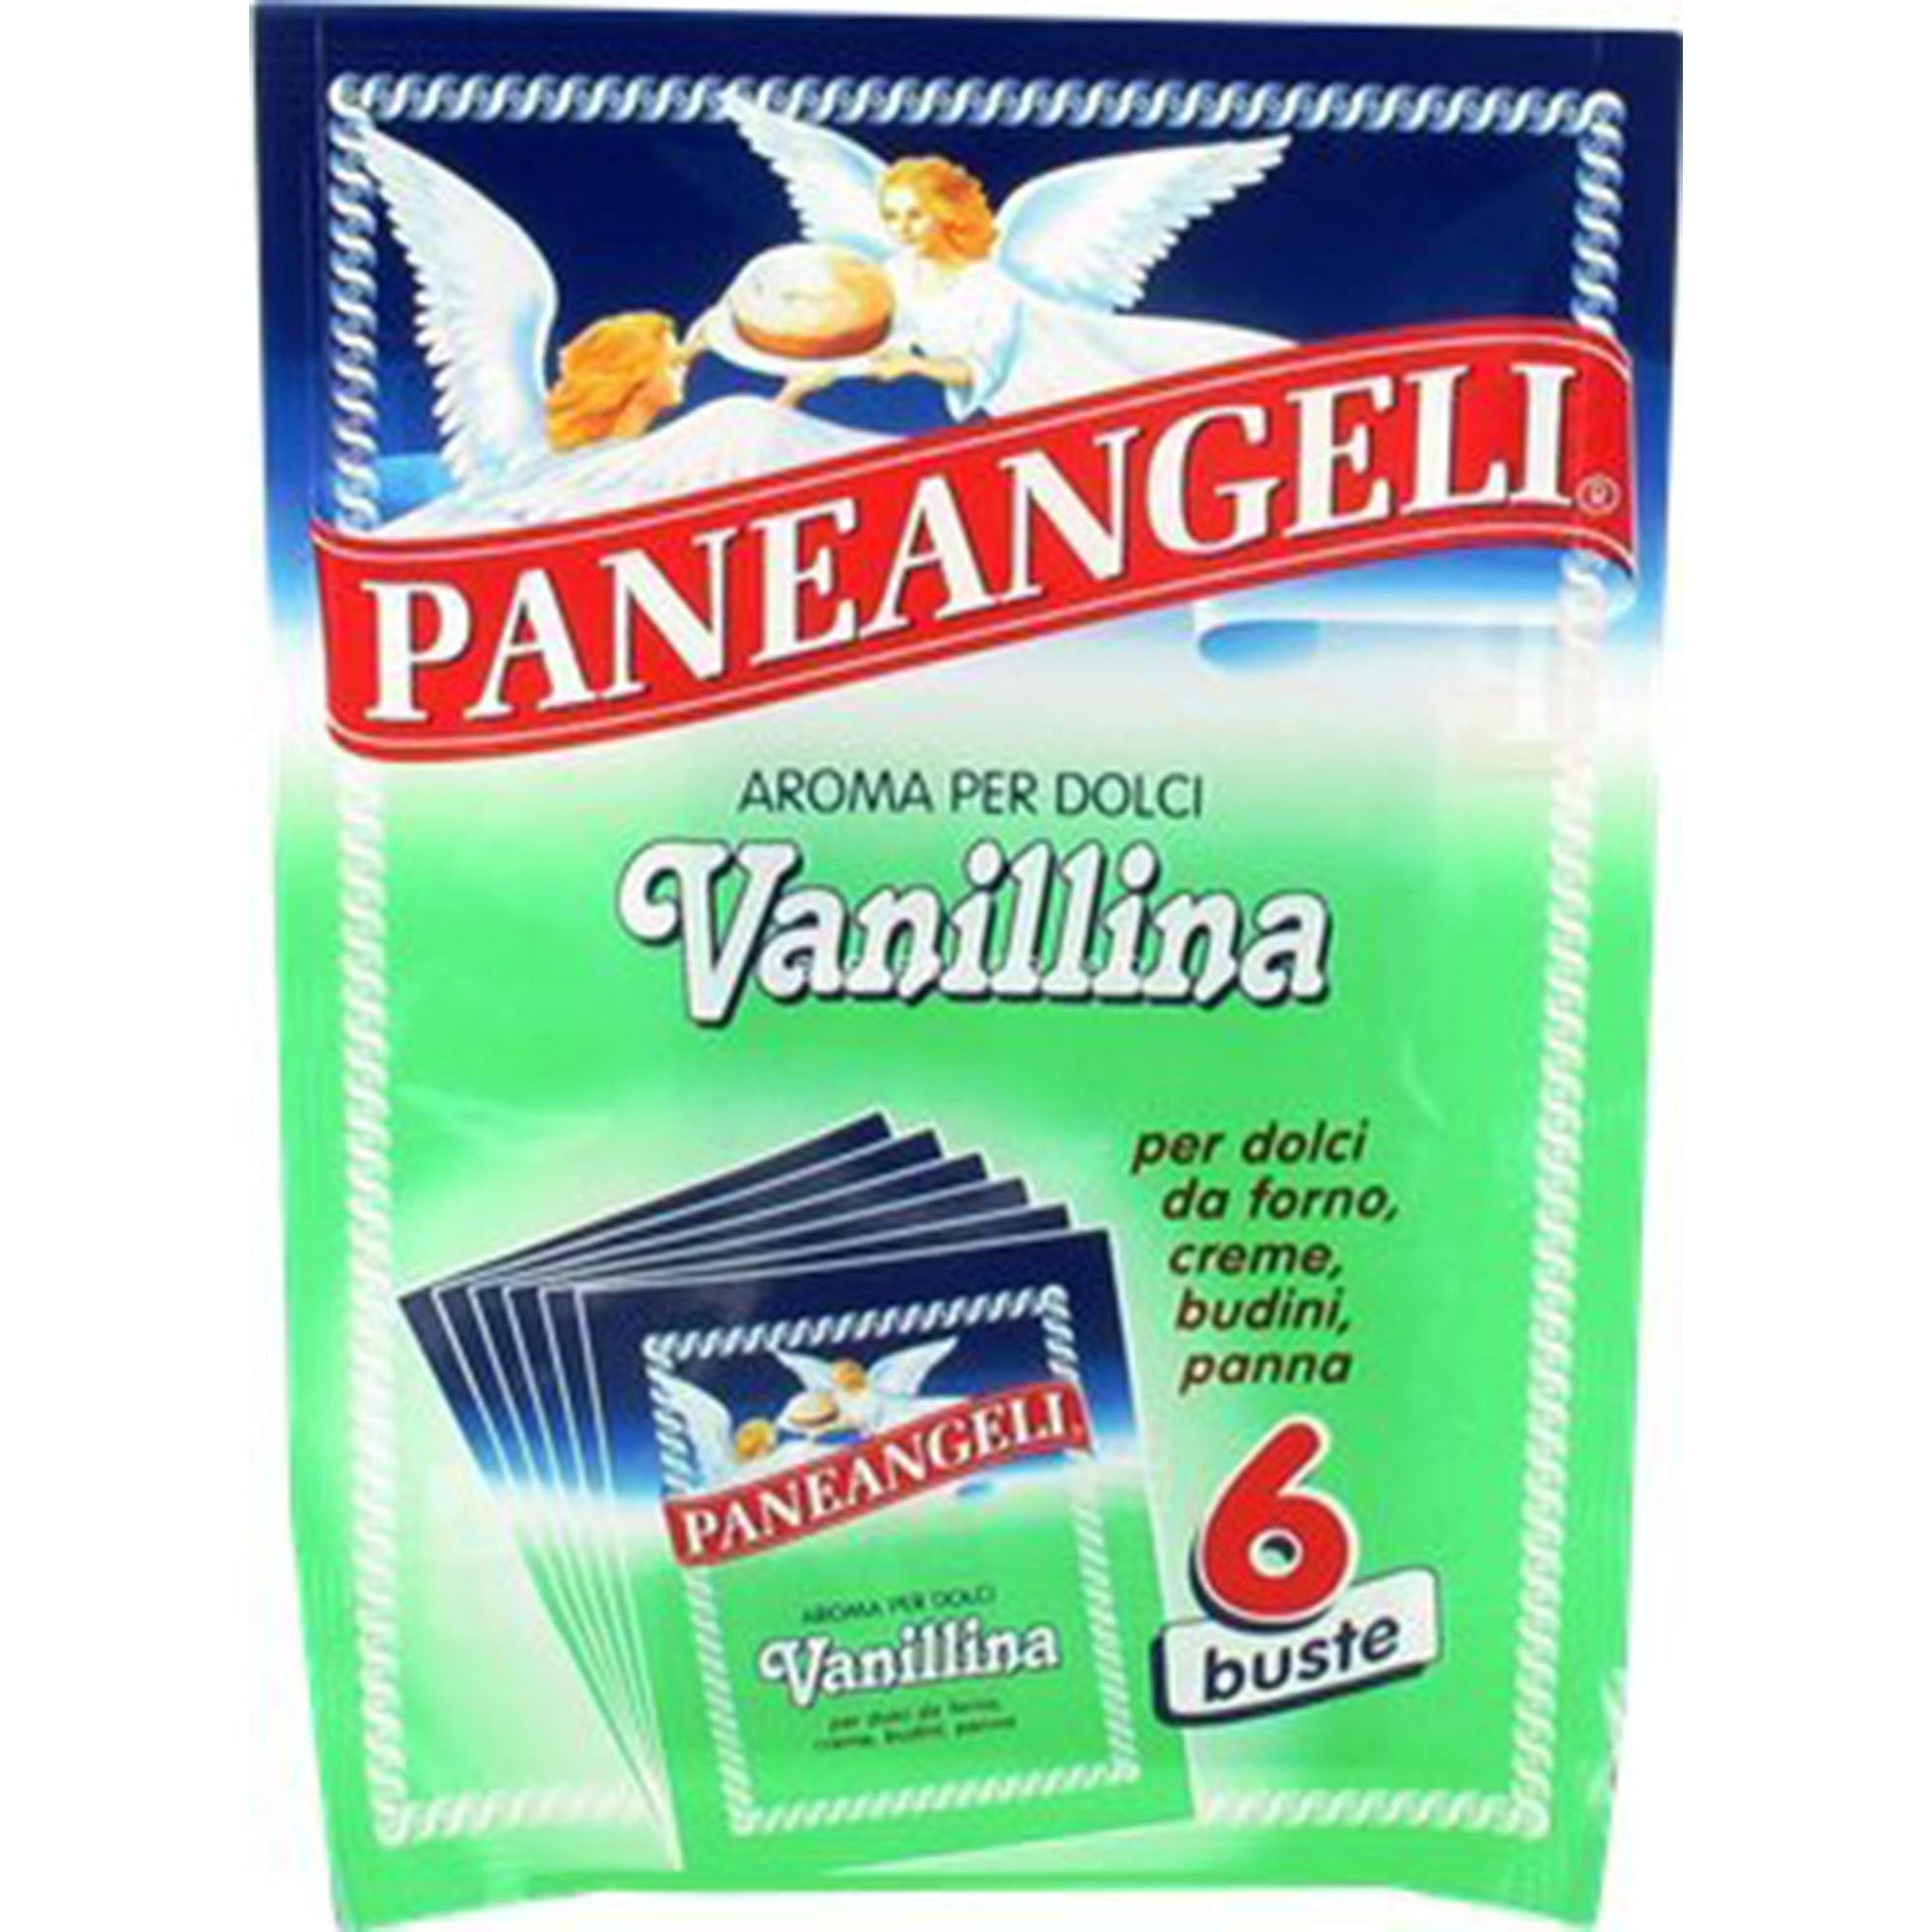 Pane Angeli Vanillina 6 Bags